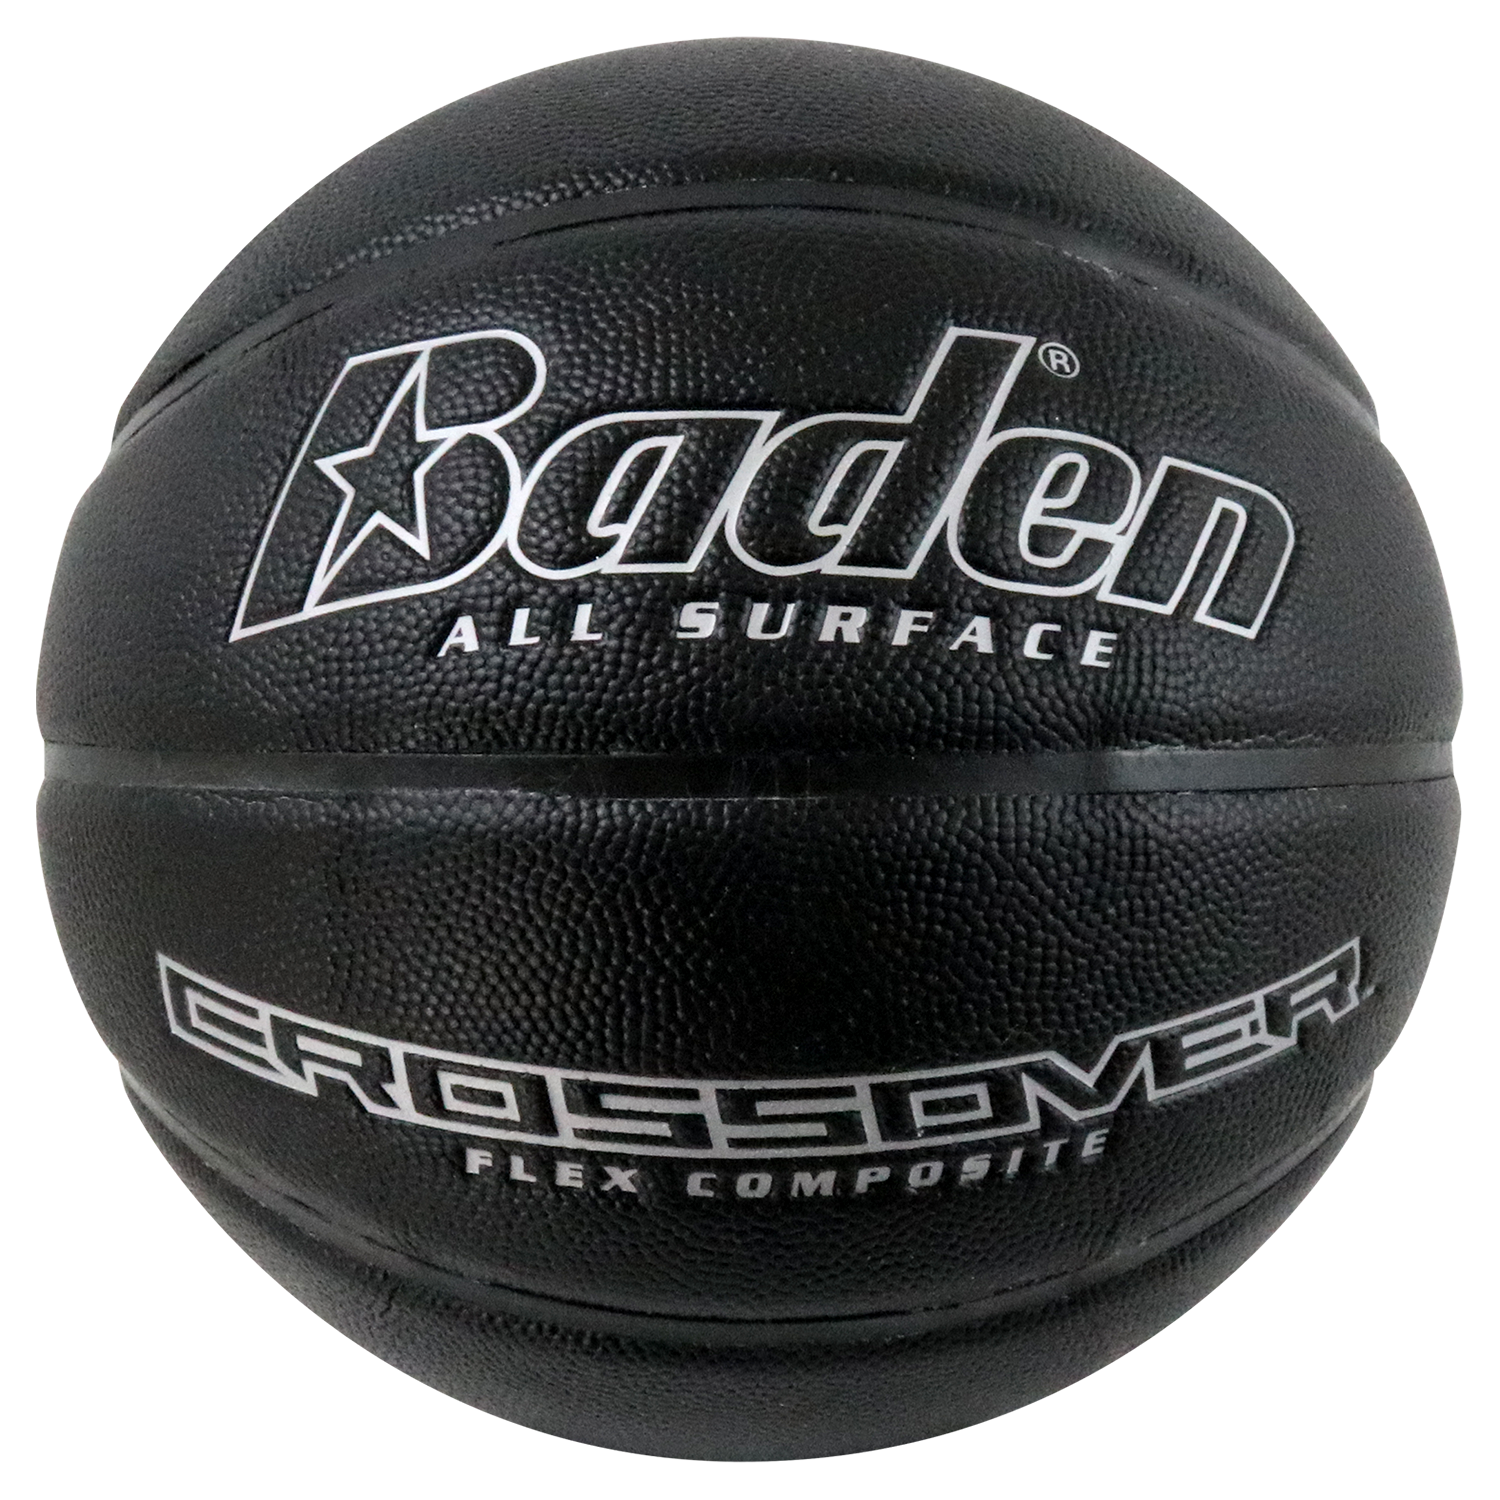 Crossover Basketball - Baden Sports